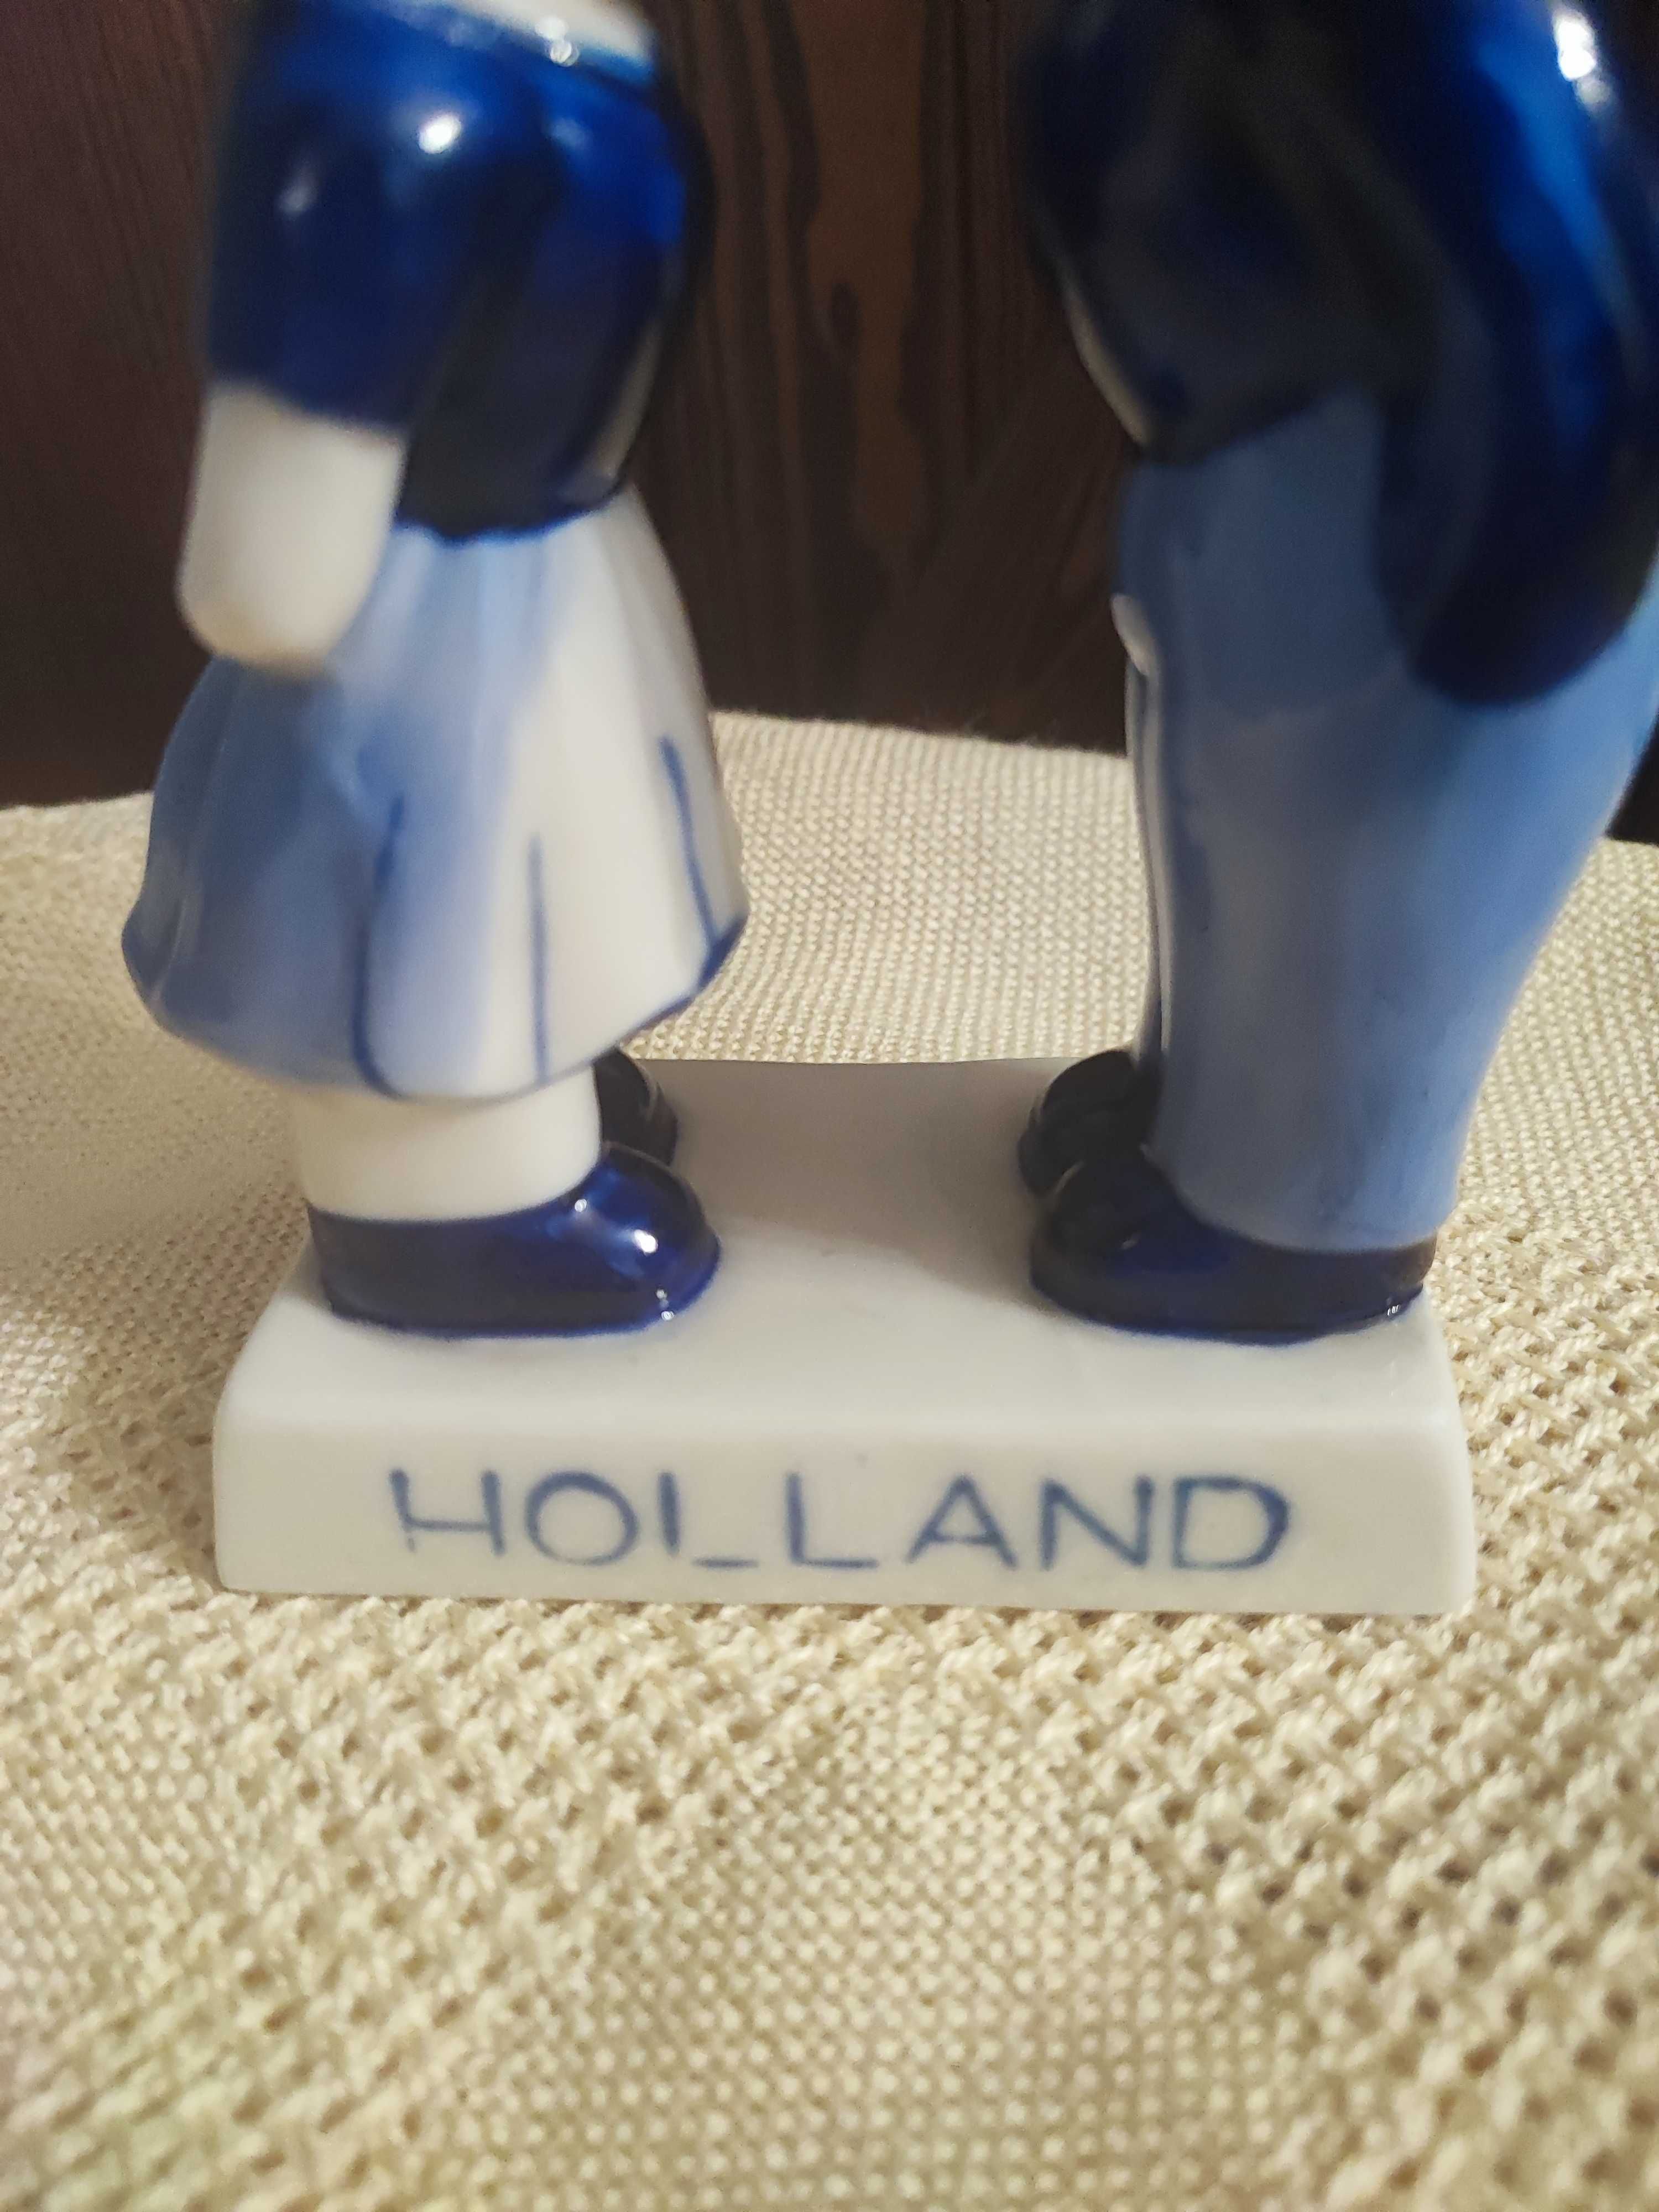 Duża figurka porcelana holenderska dzieci